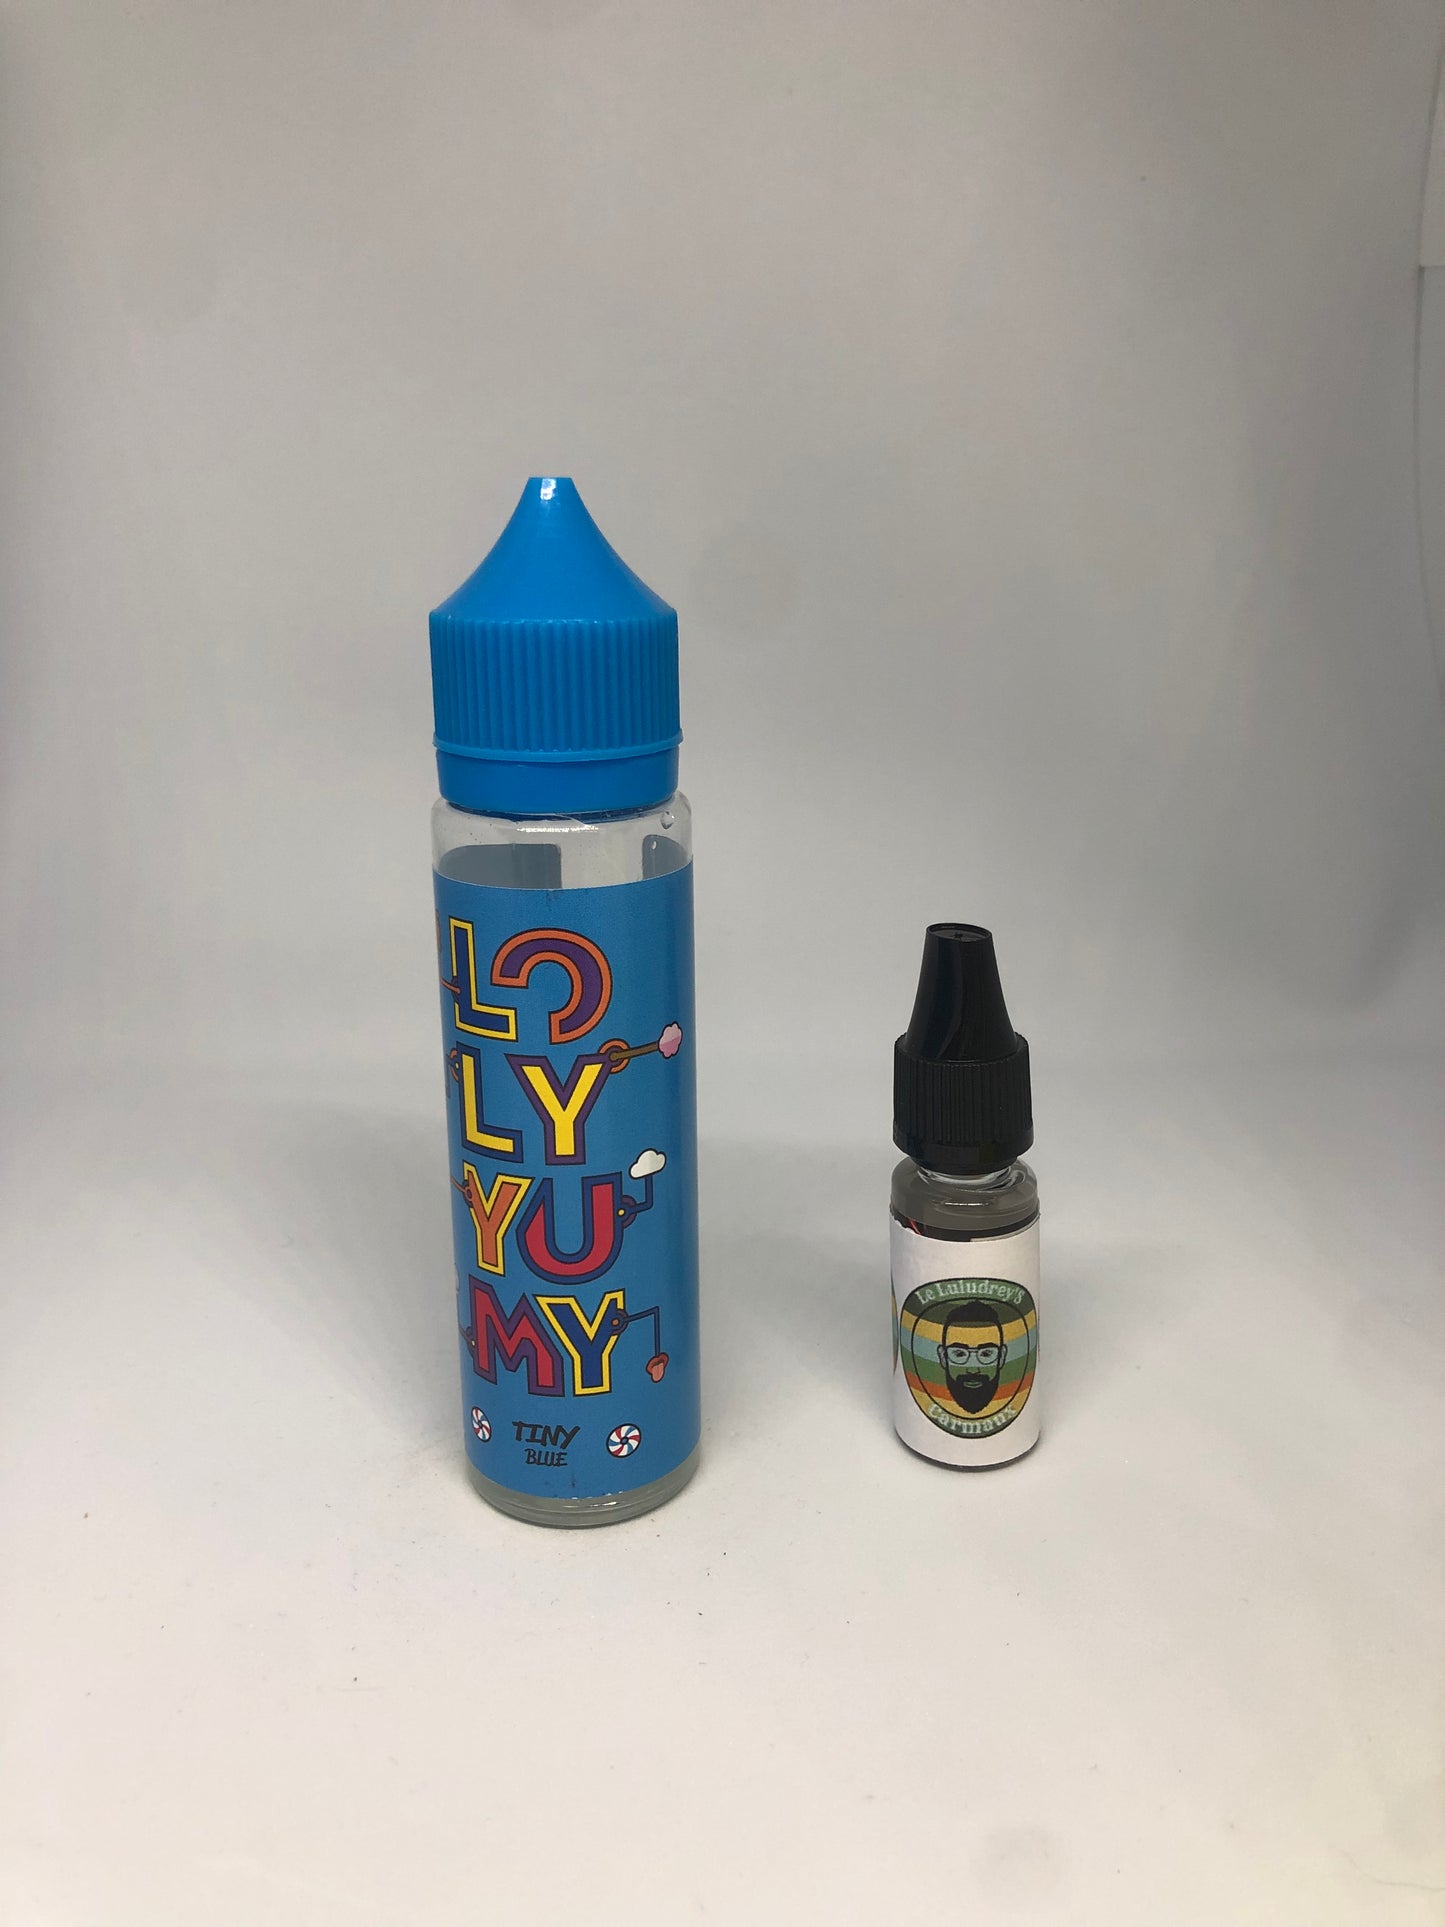 E-liquide - Lolyyumy - Tiny Blue - 50ml